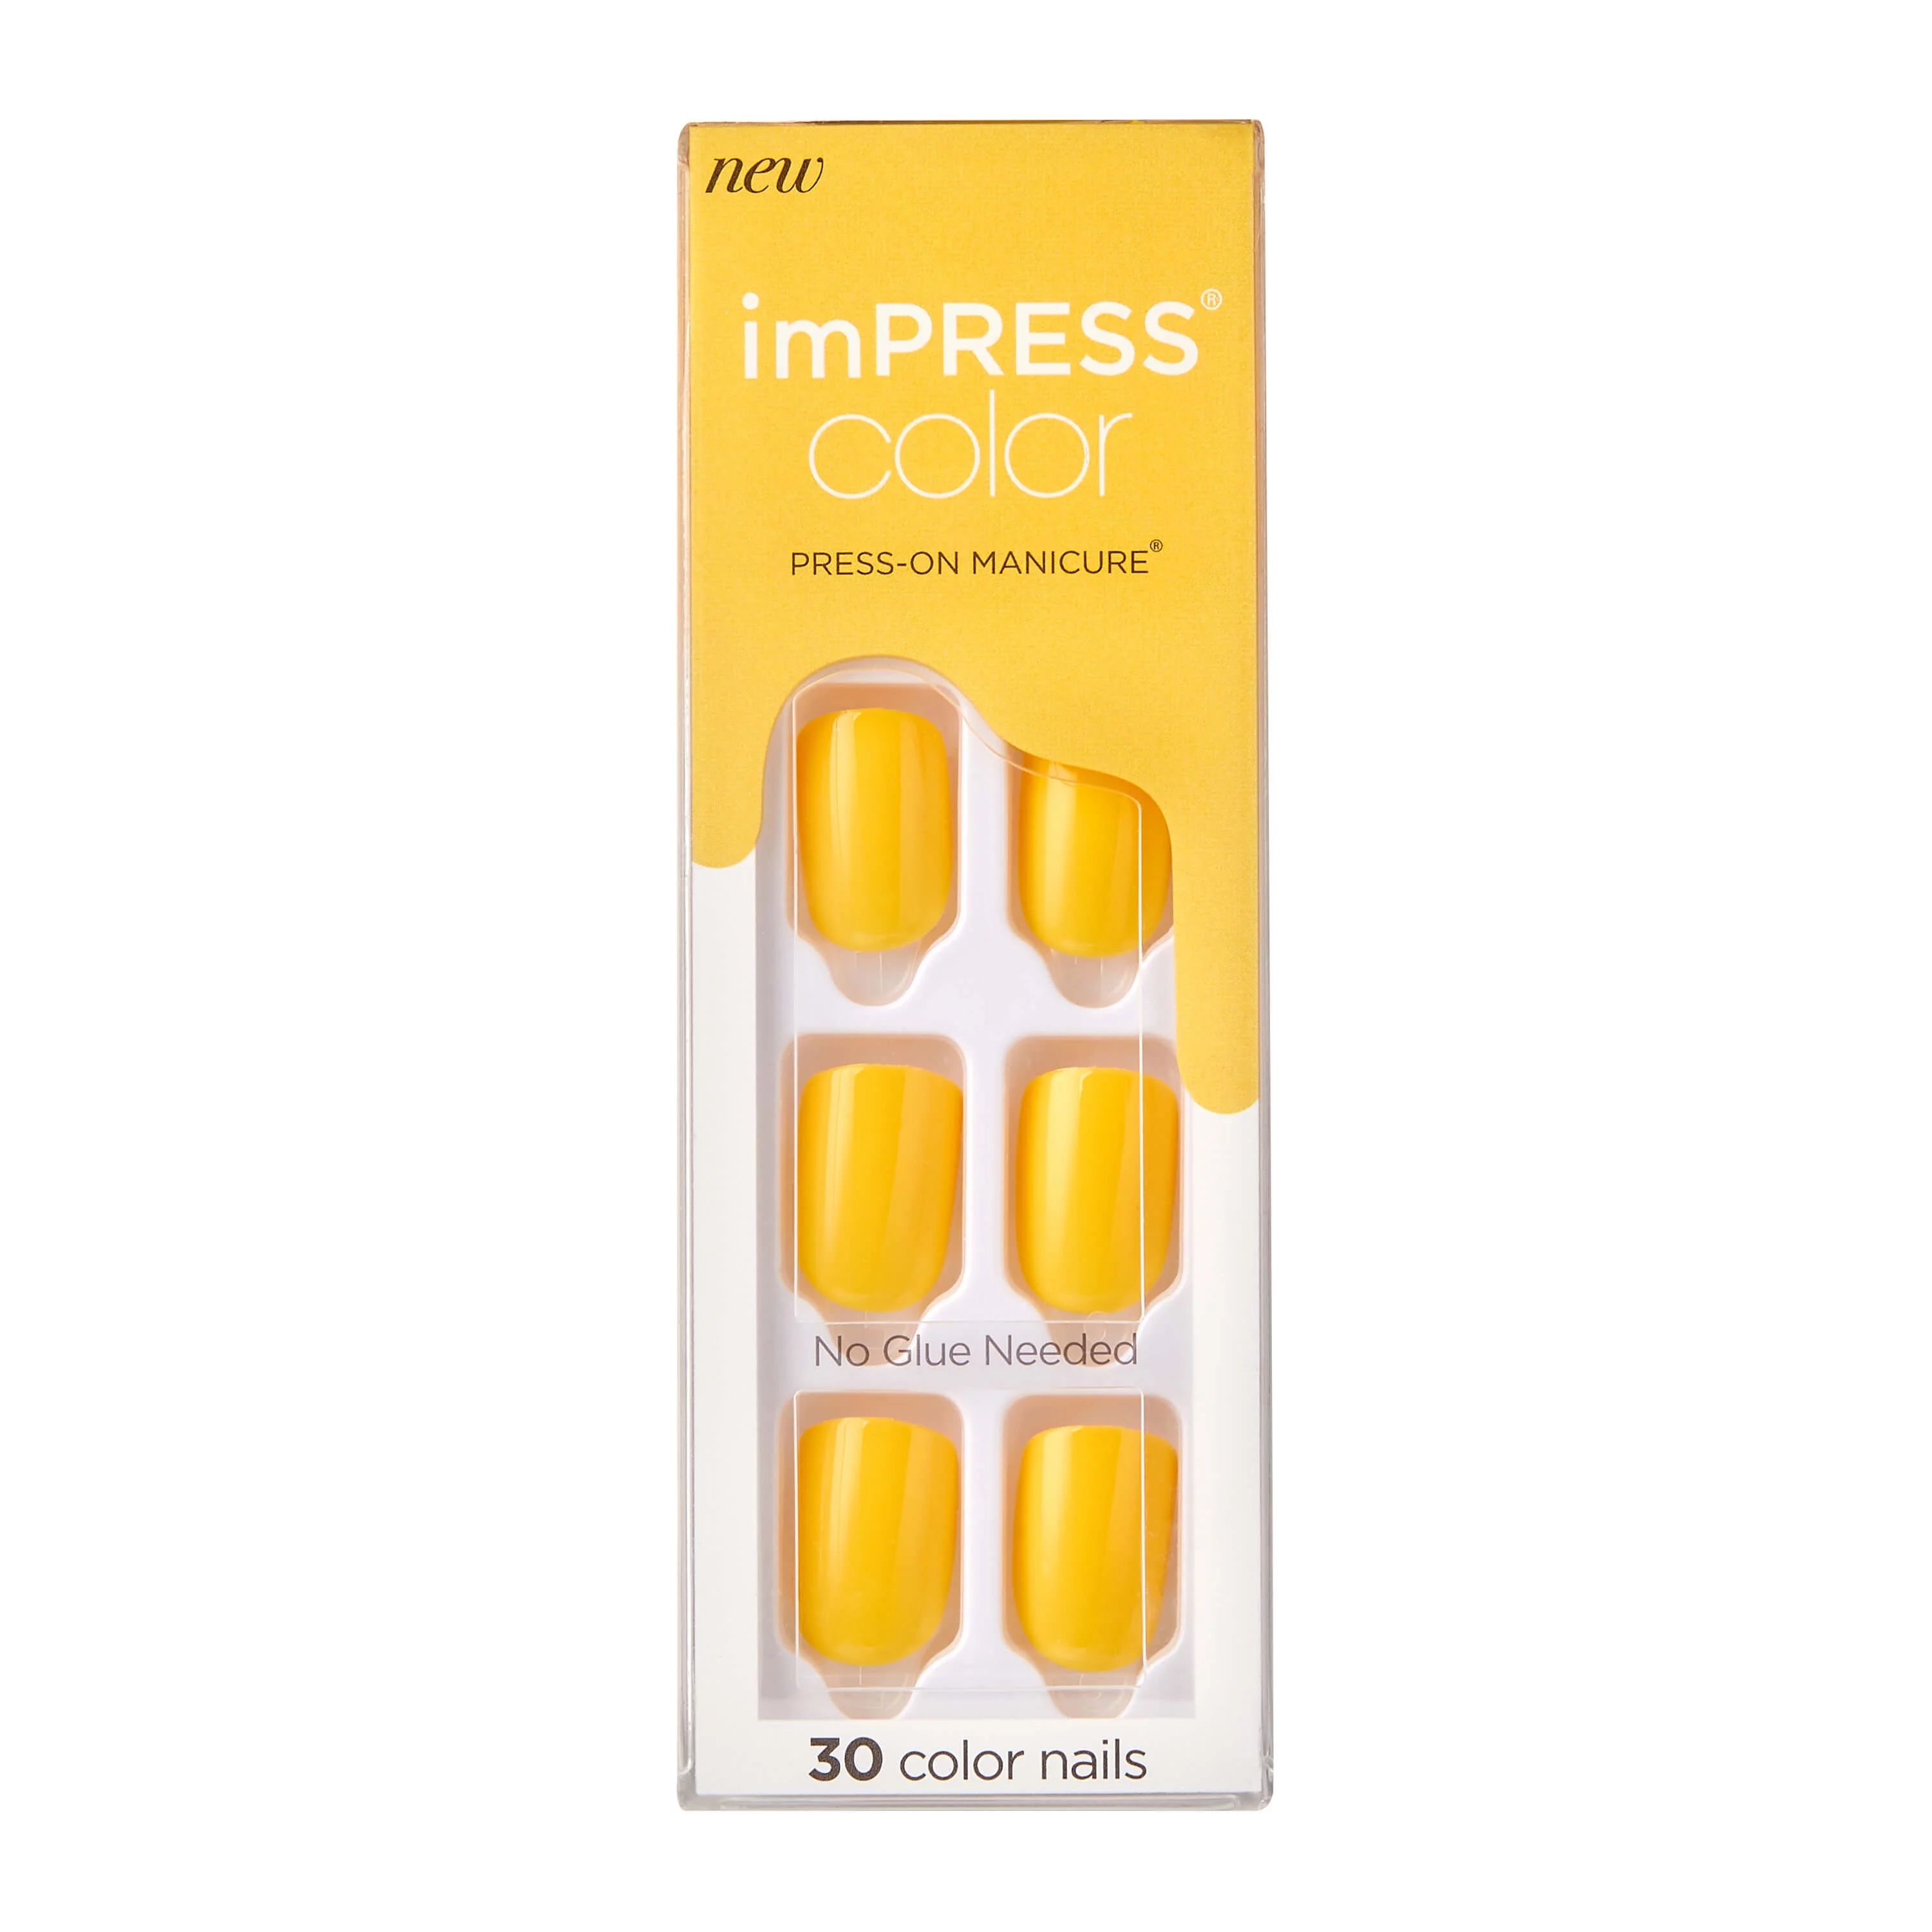 imPRESS Color Press-on Manicure, Yolo, Short | Walmart (US)